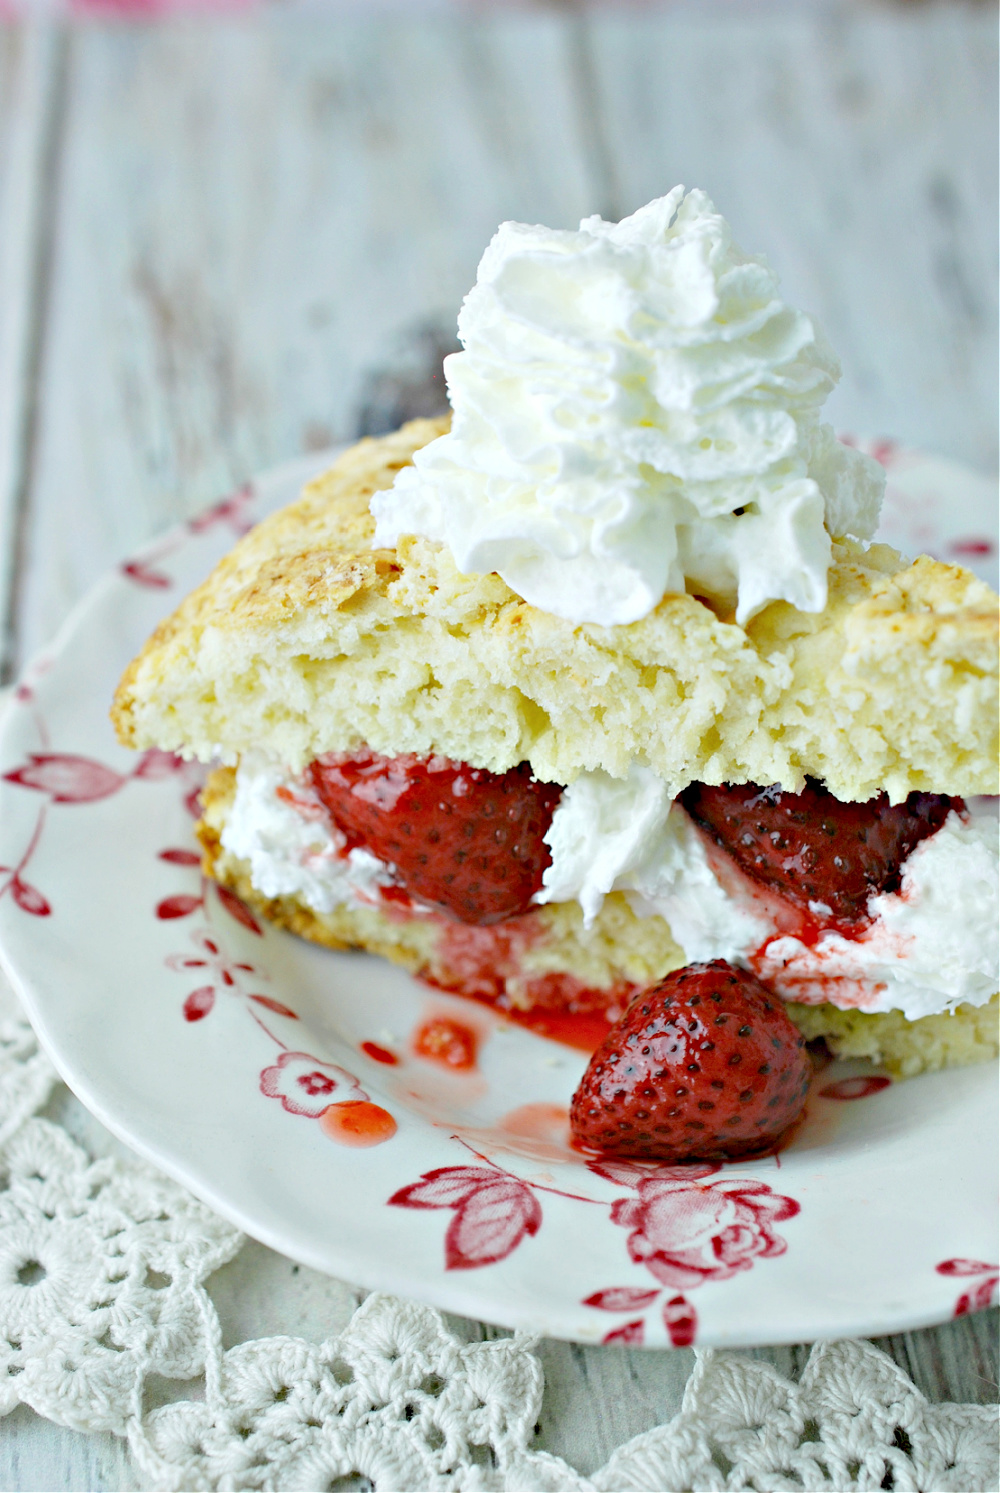 Strawberry Shortcake Day - Old Fashioned Strawberry Shortcake Recipe and Macy's #AmericanIcons